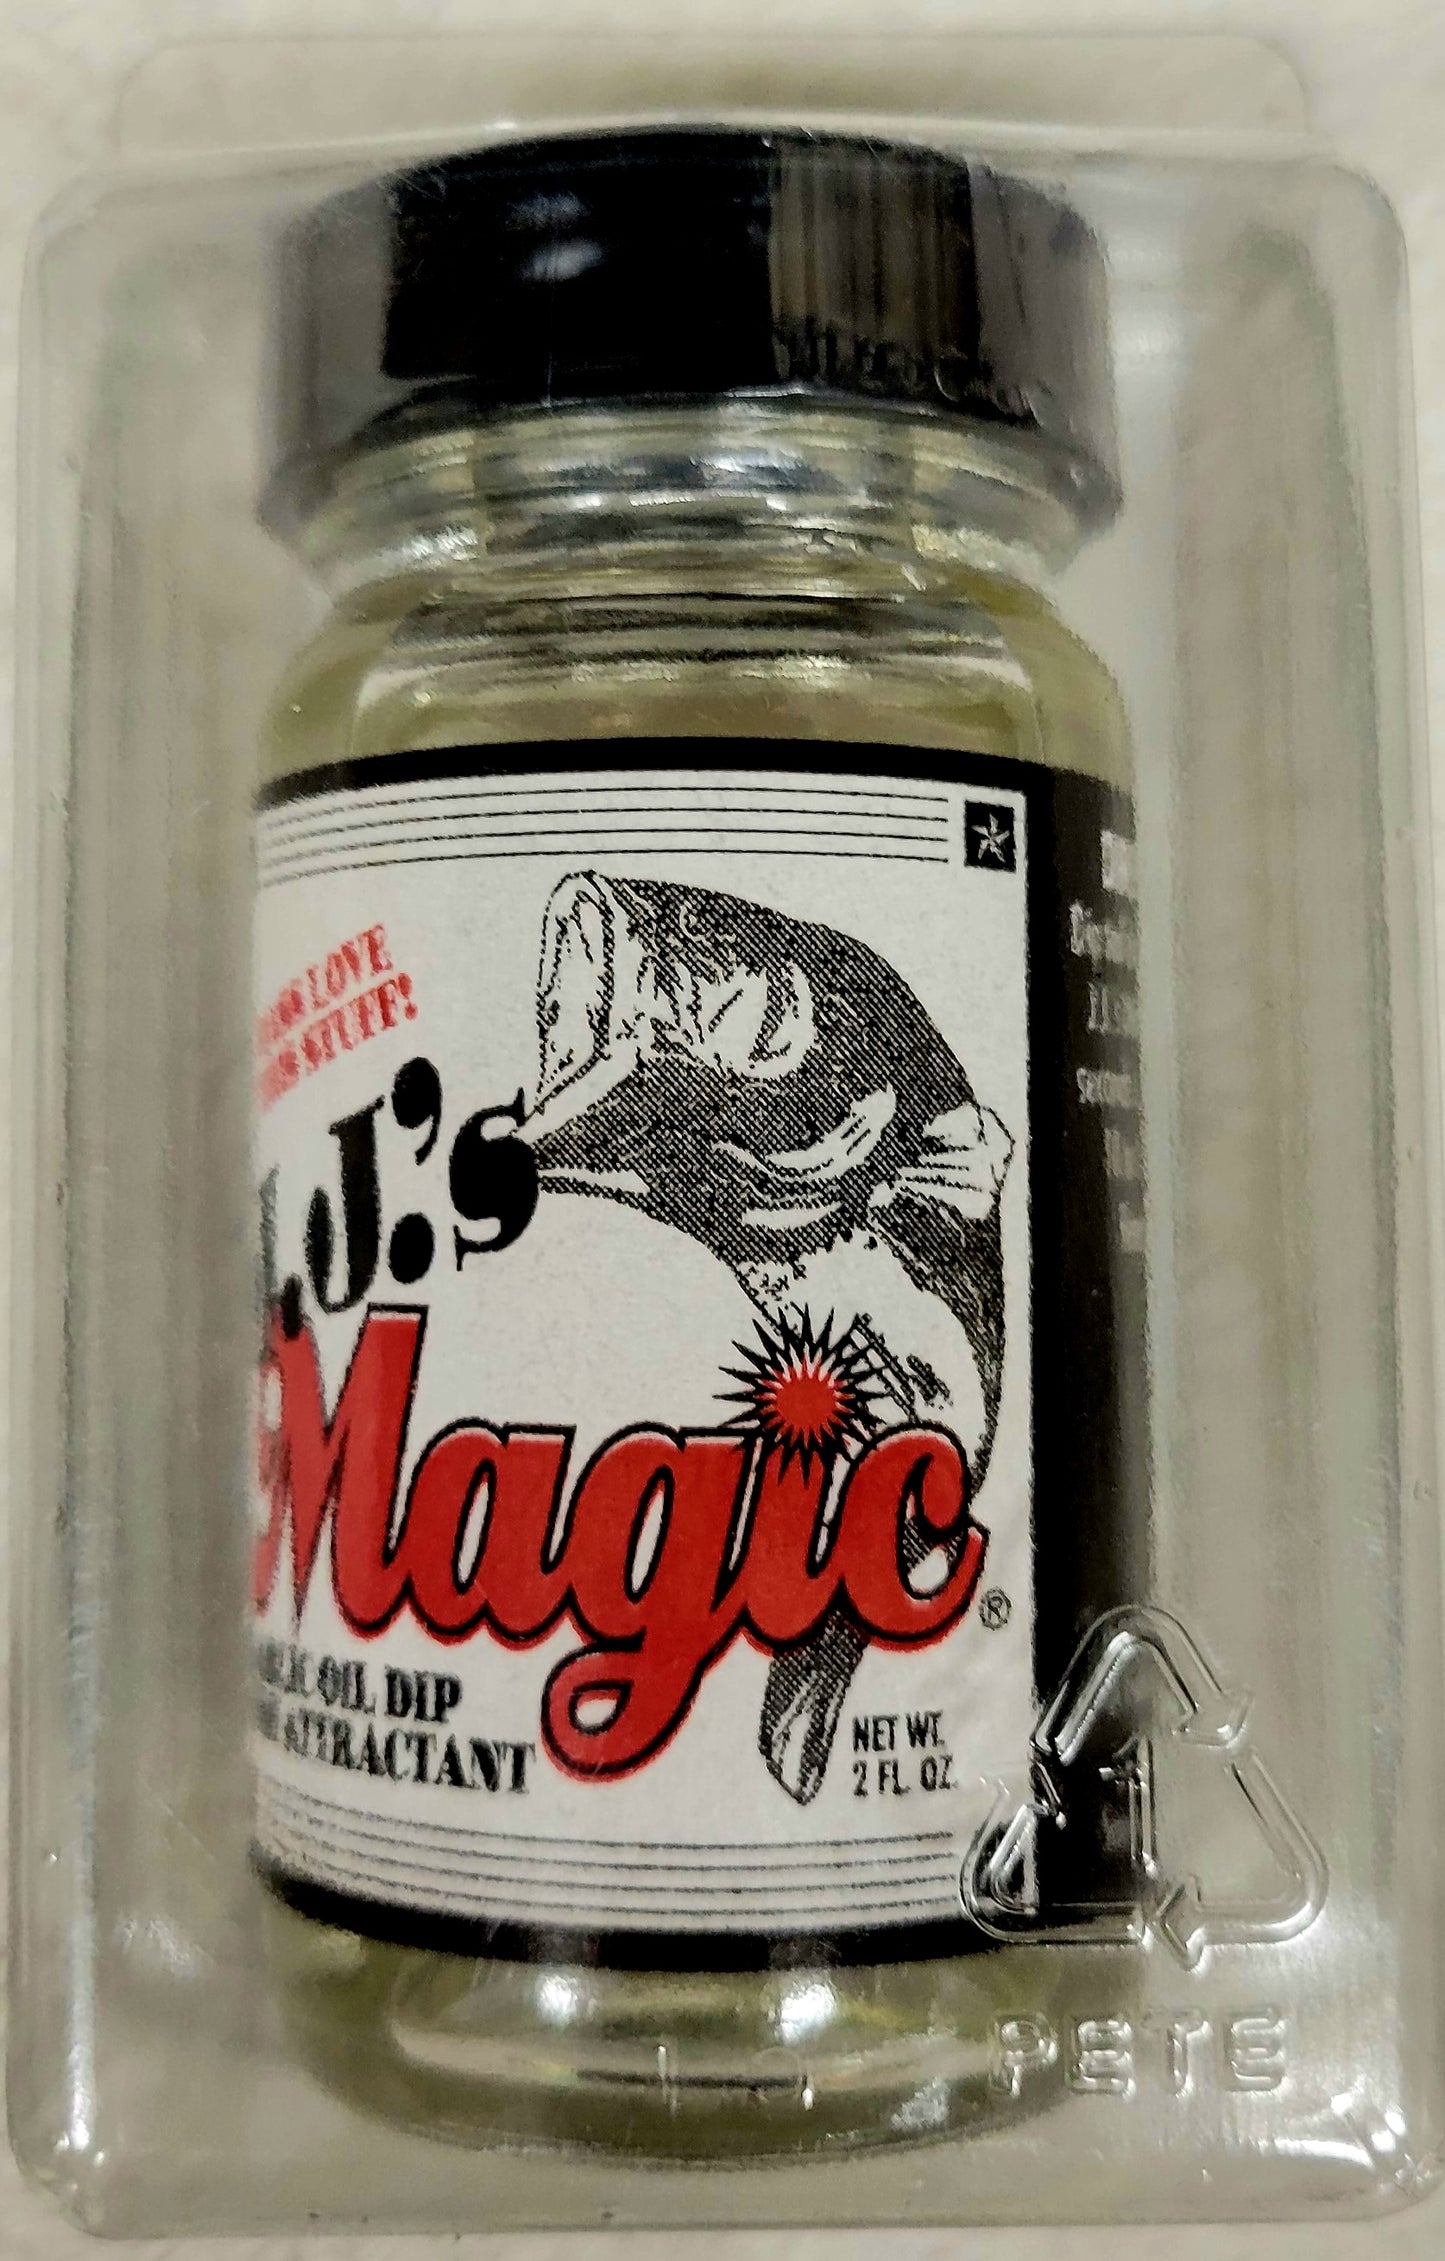 JJ's Magic Dippin' Dye w/ Garlic Oil